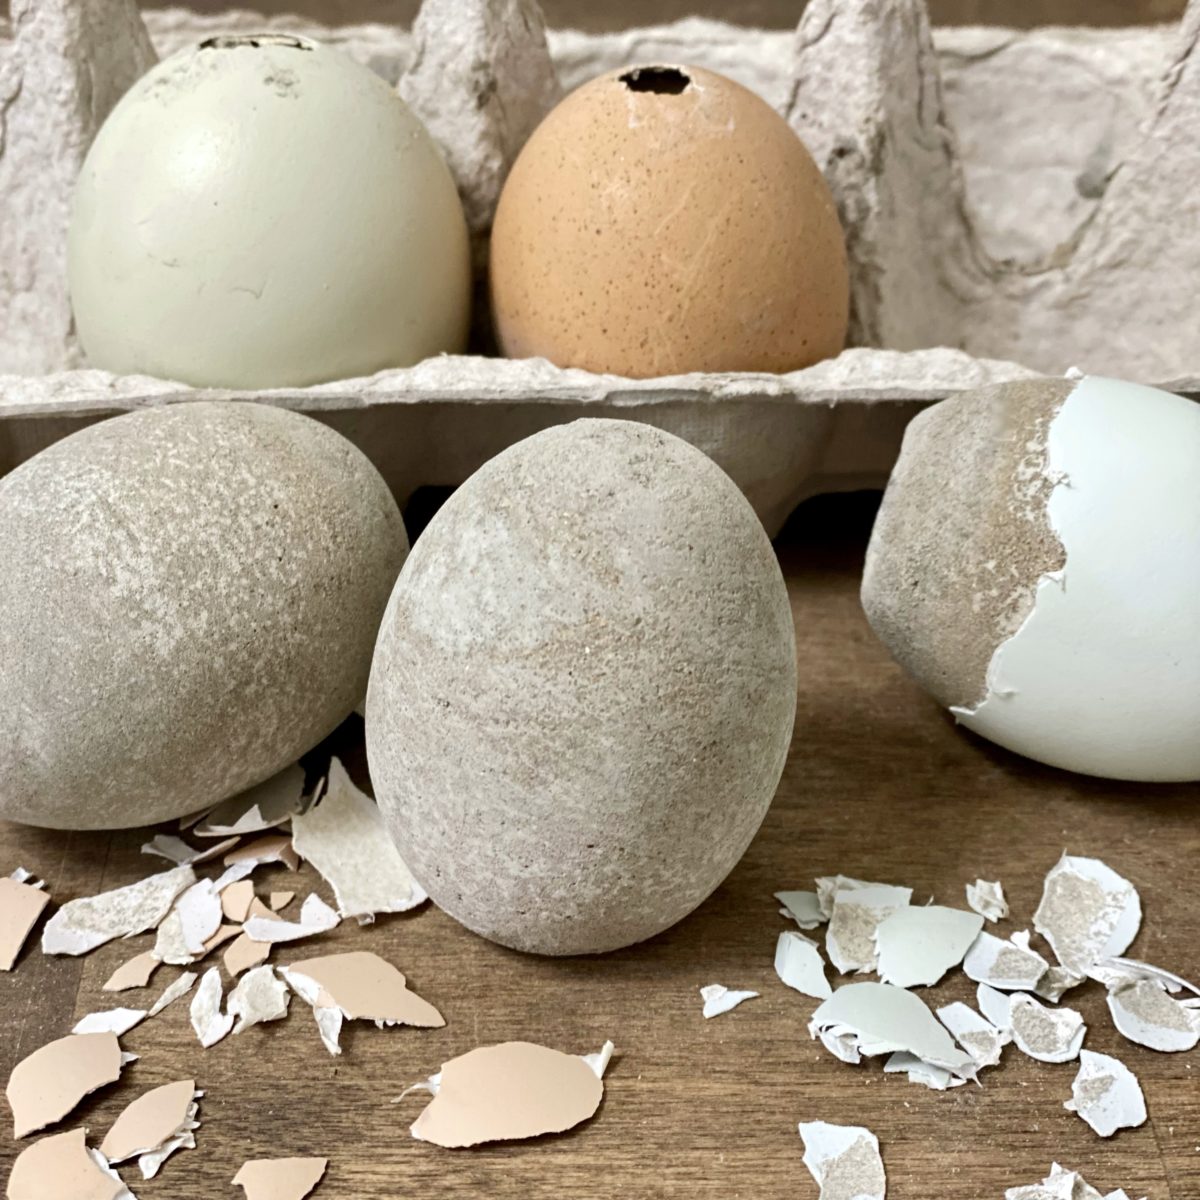 Peeling the eggshells to reveal concrete eggs inside.